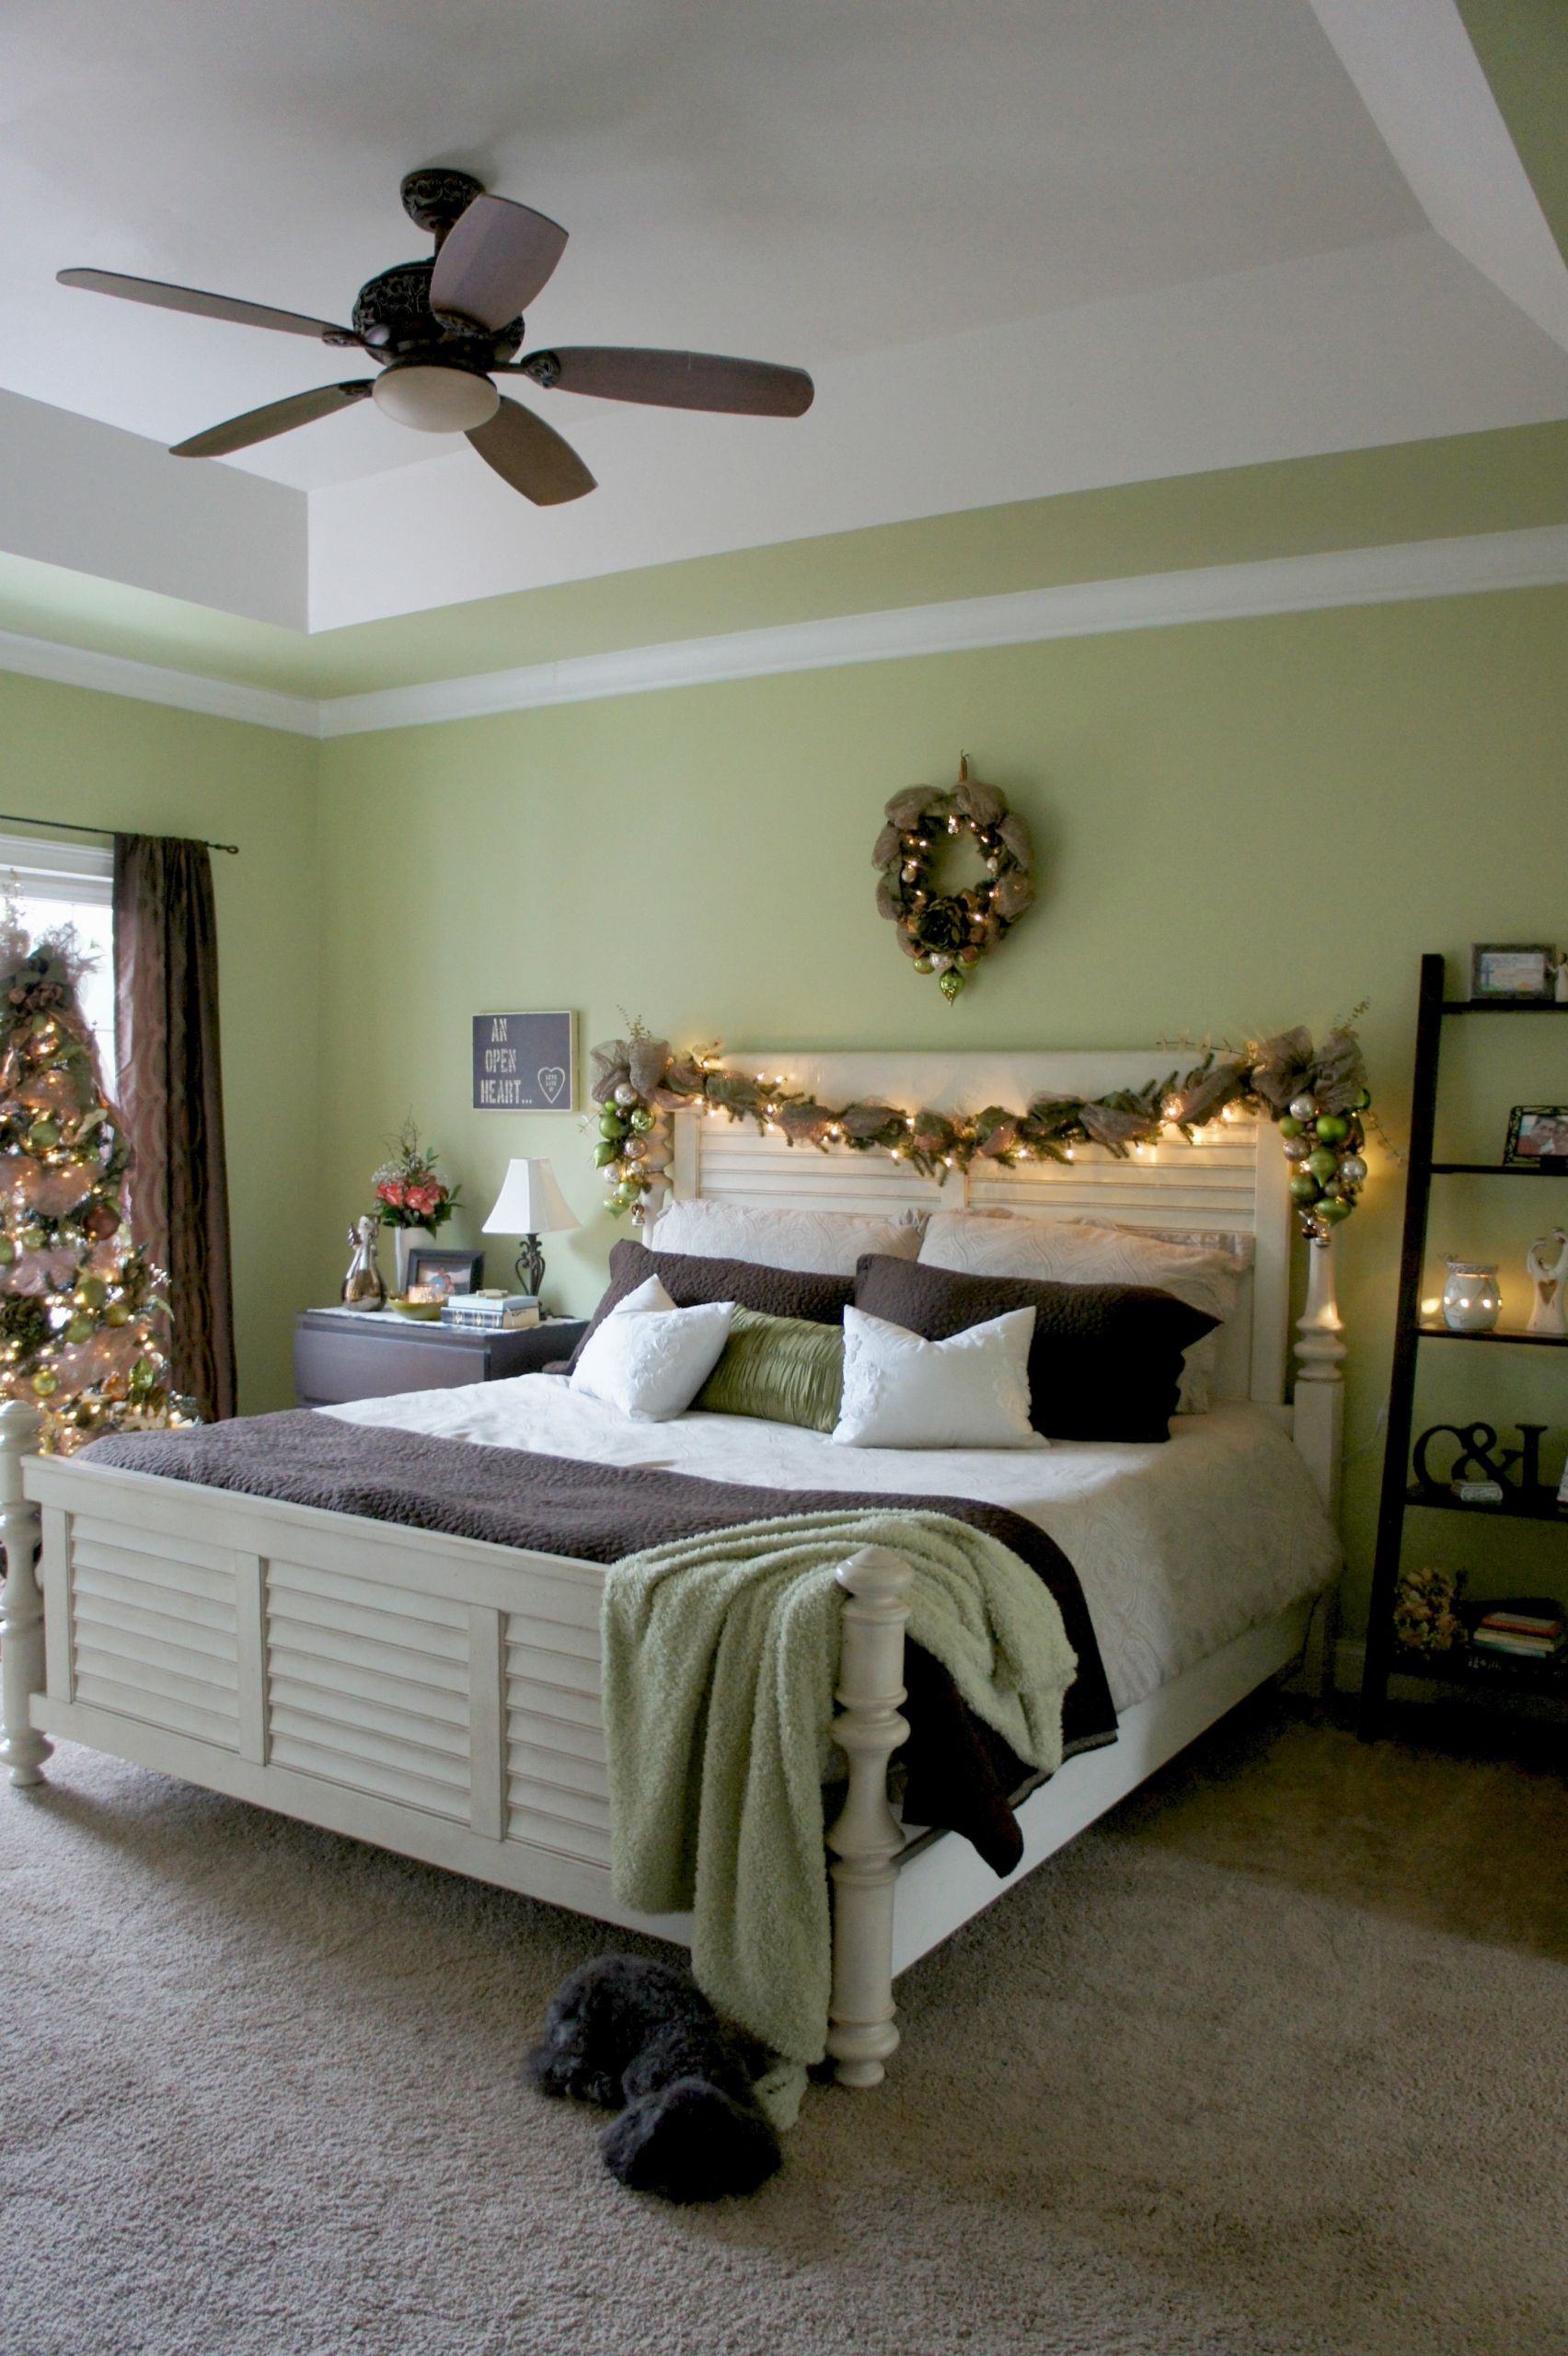 Bedroom Decoration Pics
 A Christmas Bedroom